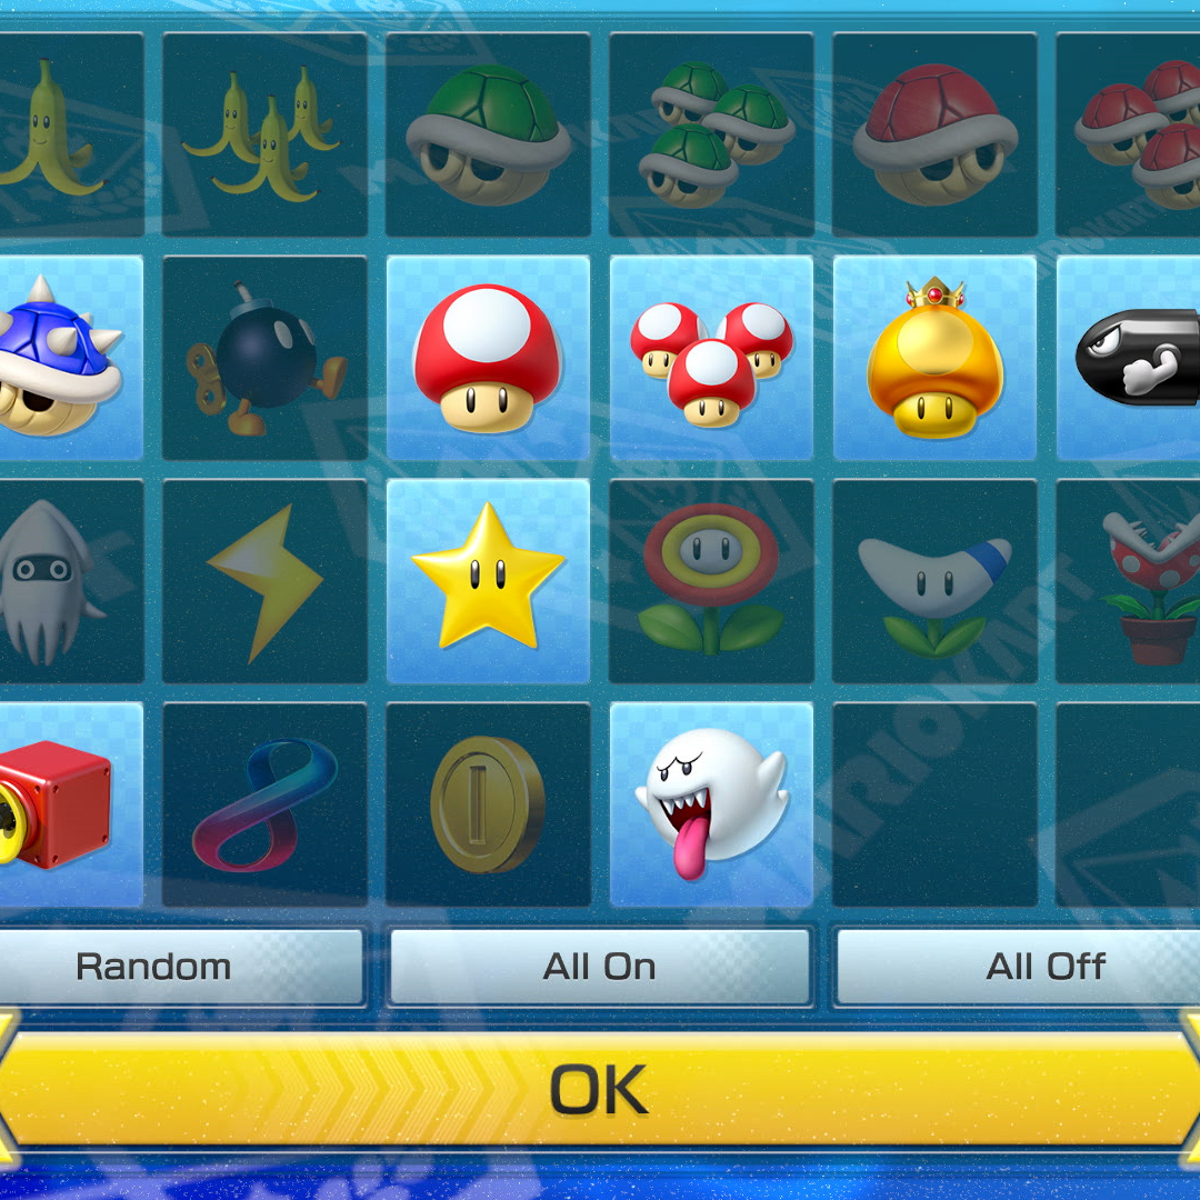 Mario Kart 8 Deluxe gets custom items feature today in free update